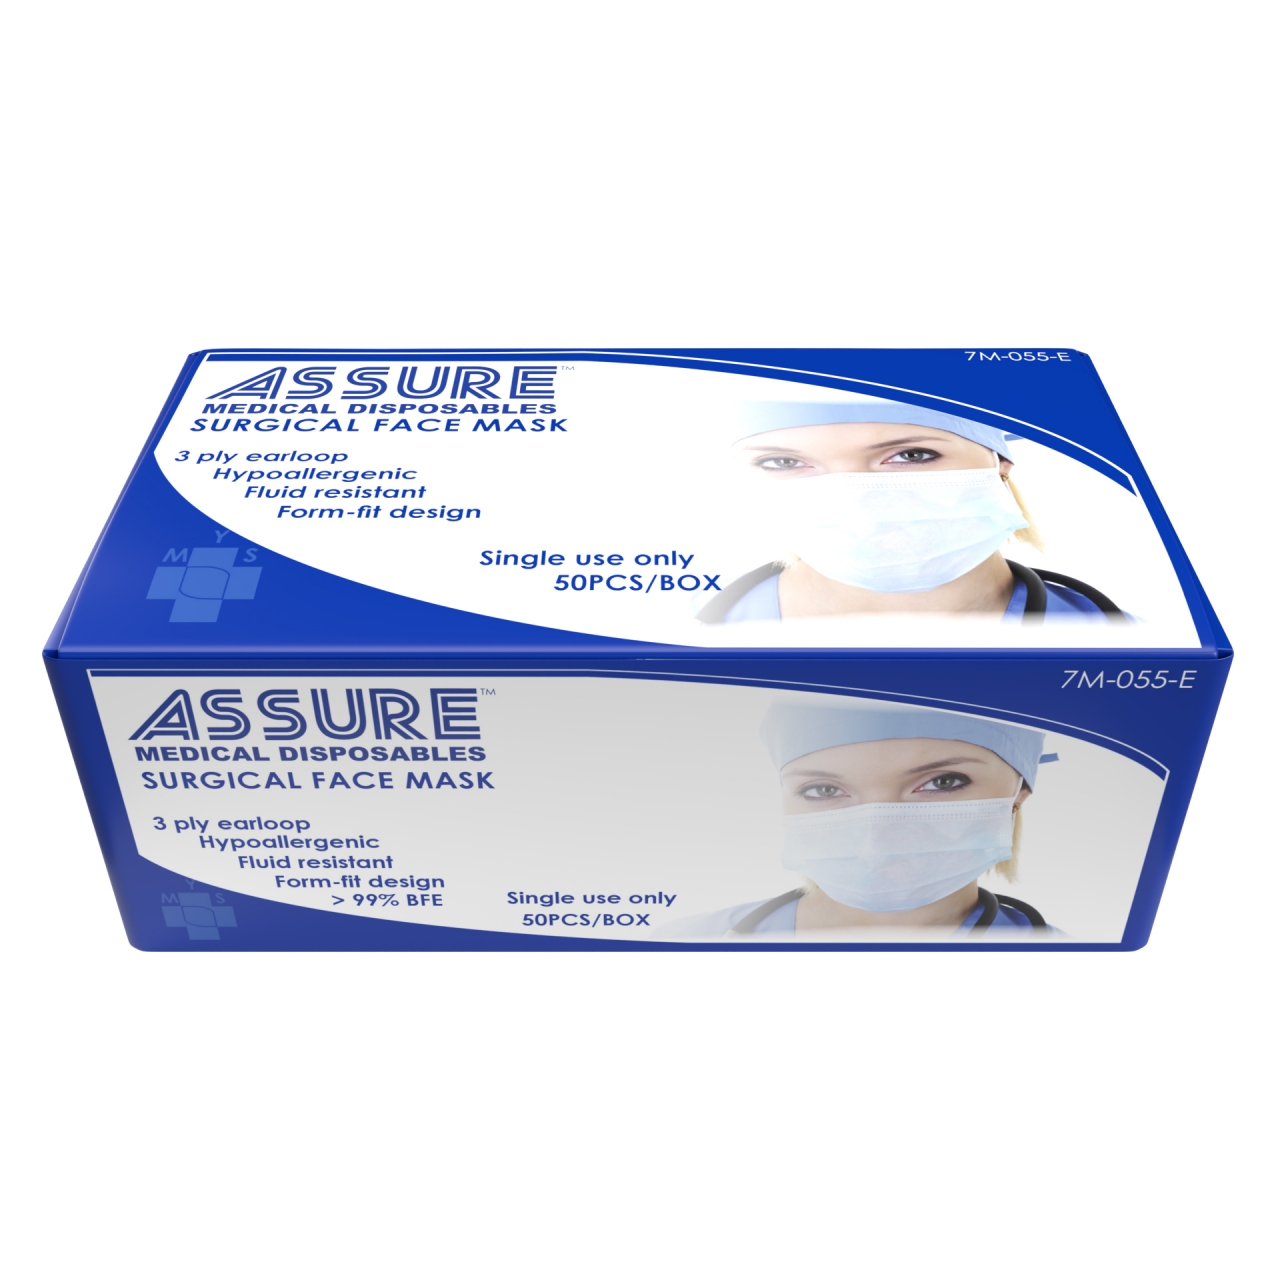 ASSURE Surgical Mask, 3-Ply Earloop, 50 Pcs/Box